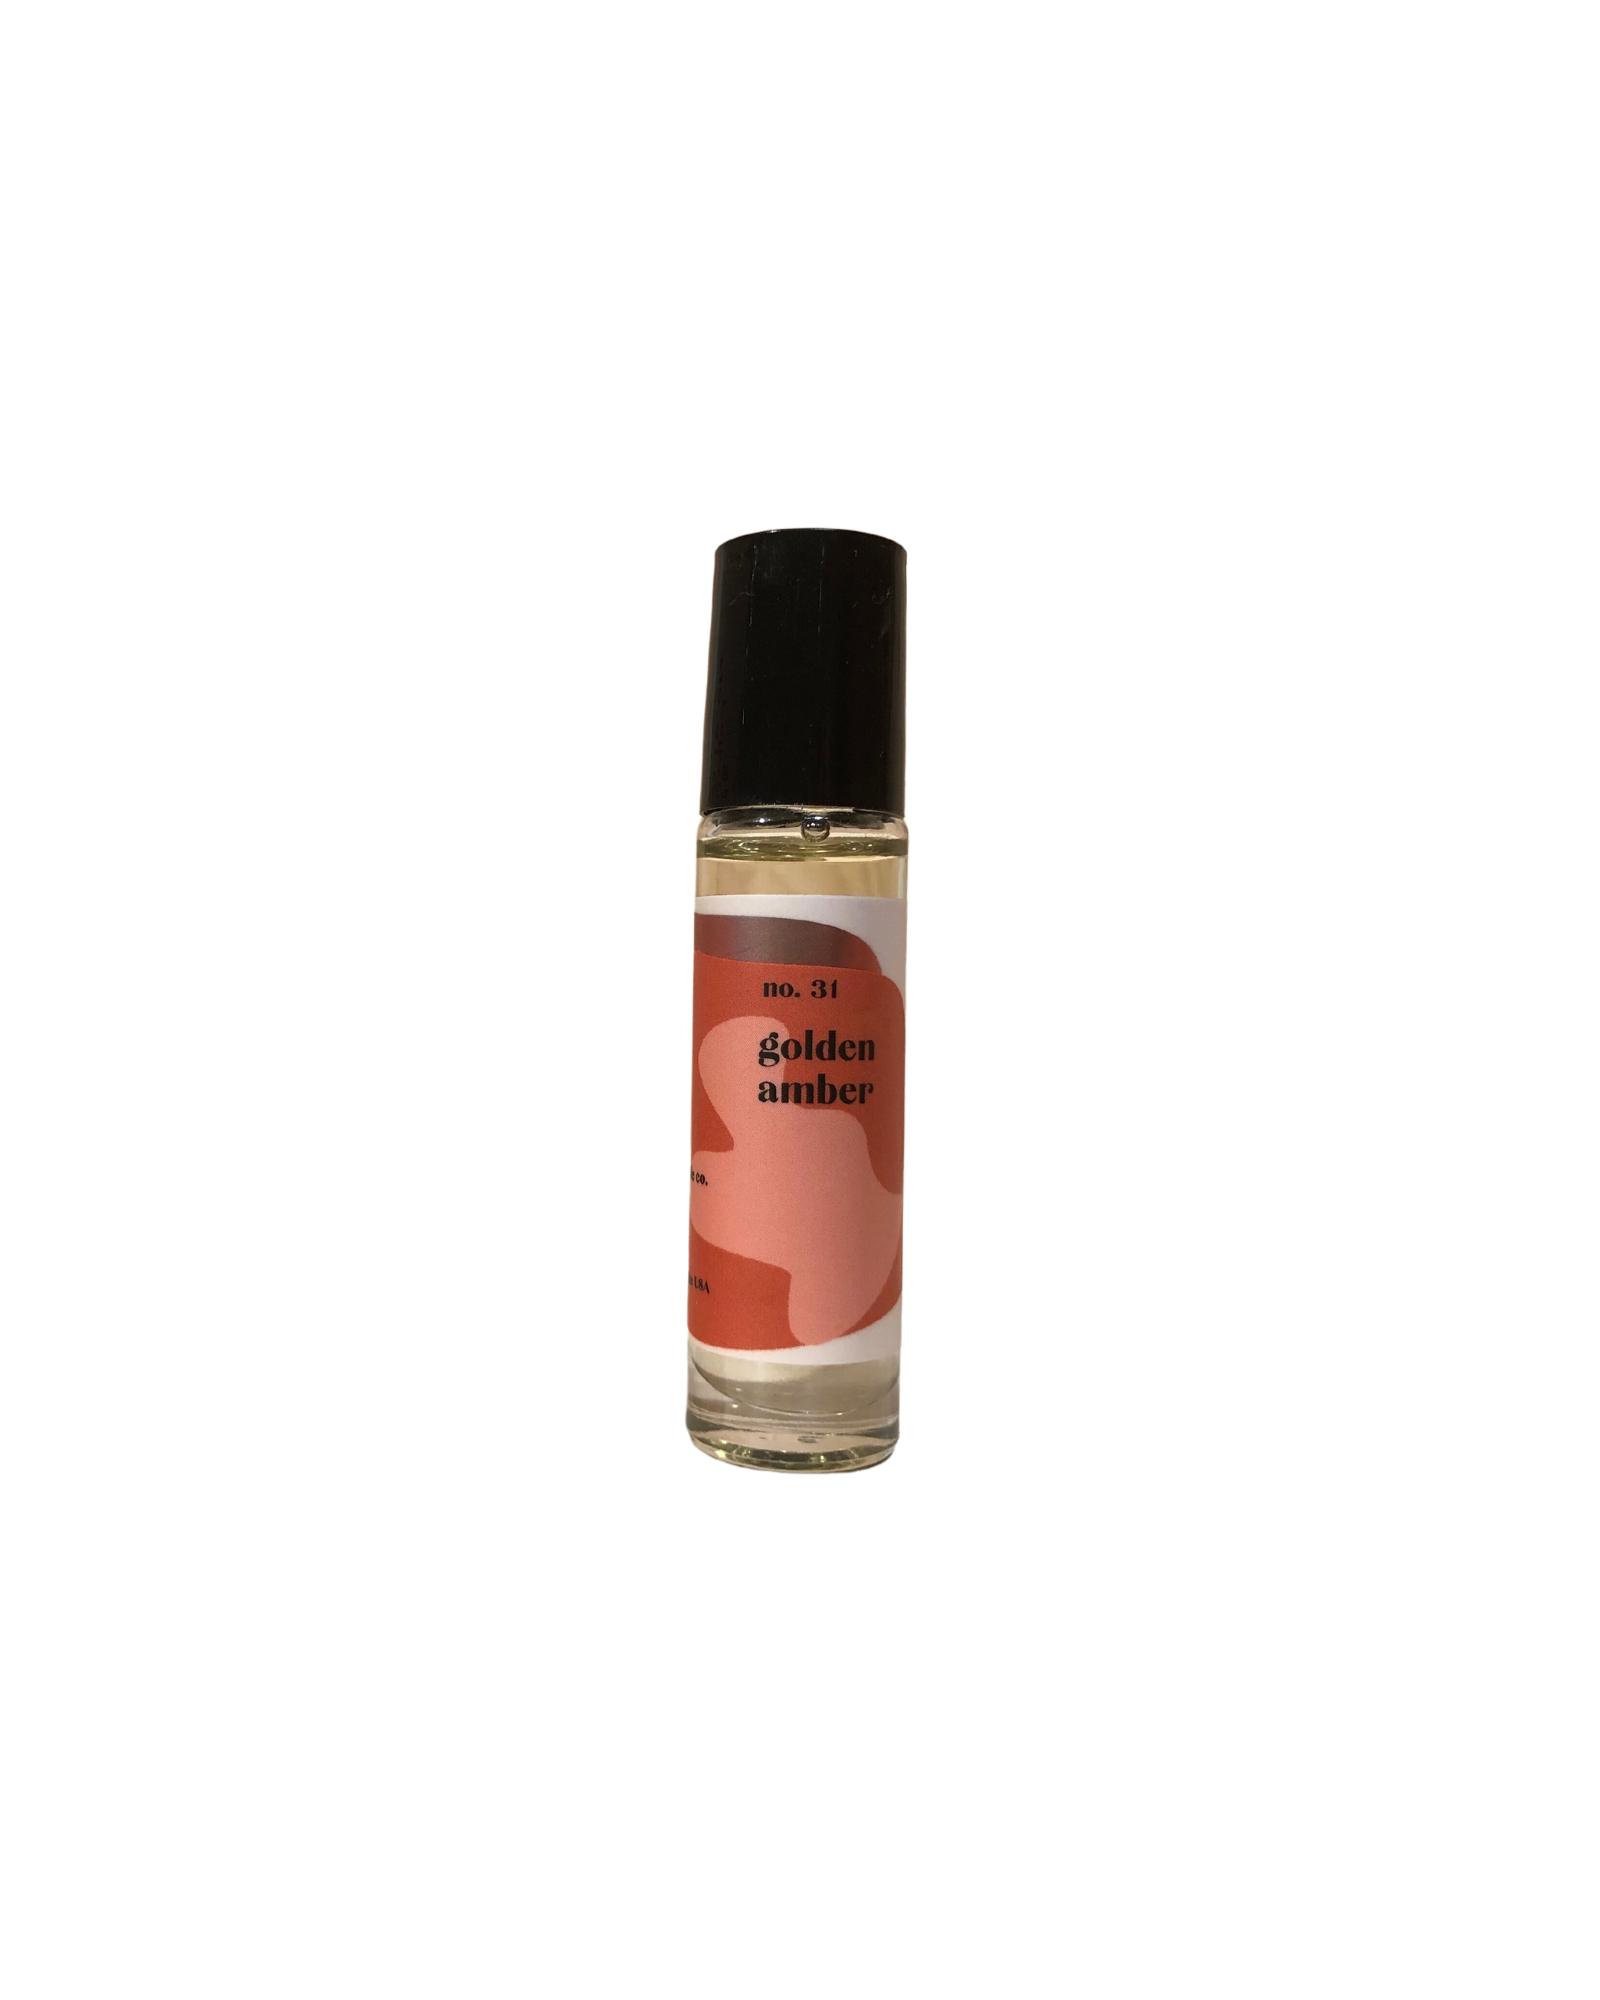 Amber Perfume Oil Roll-On